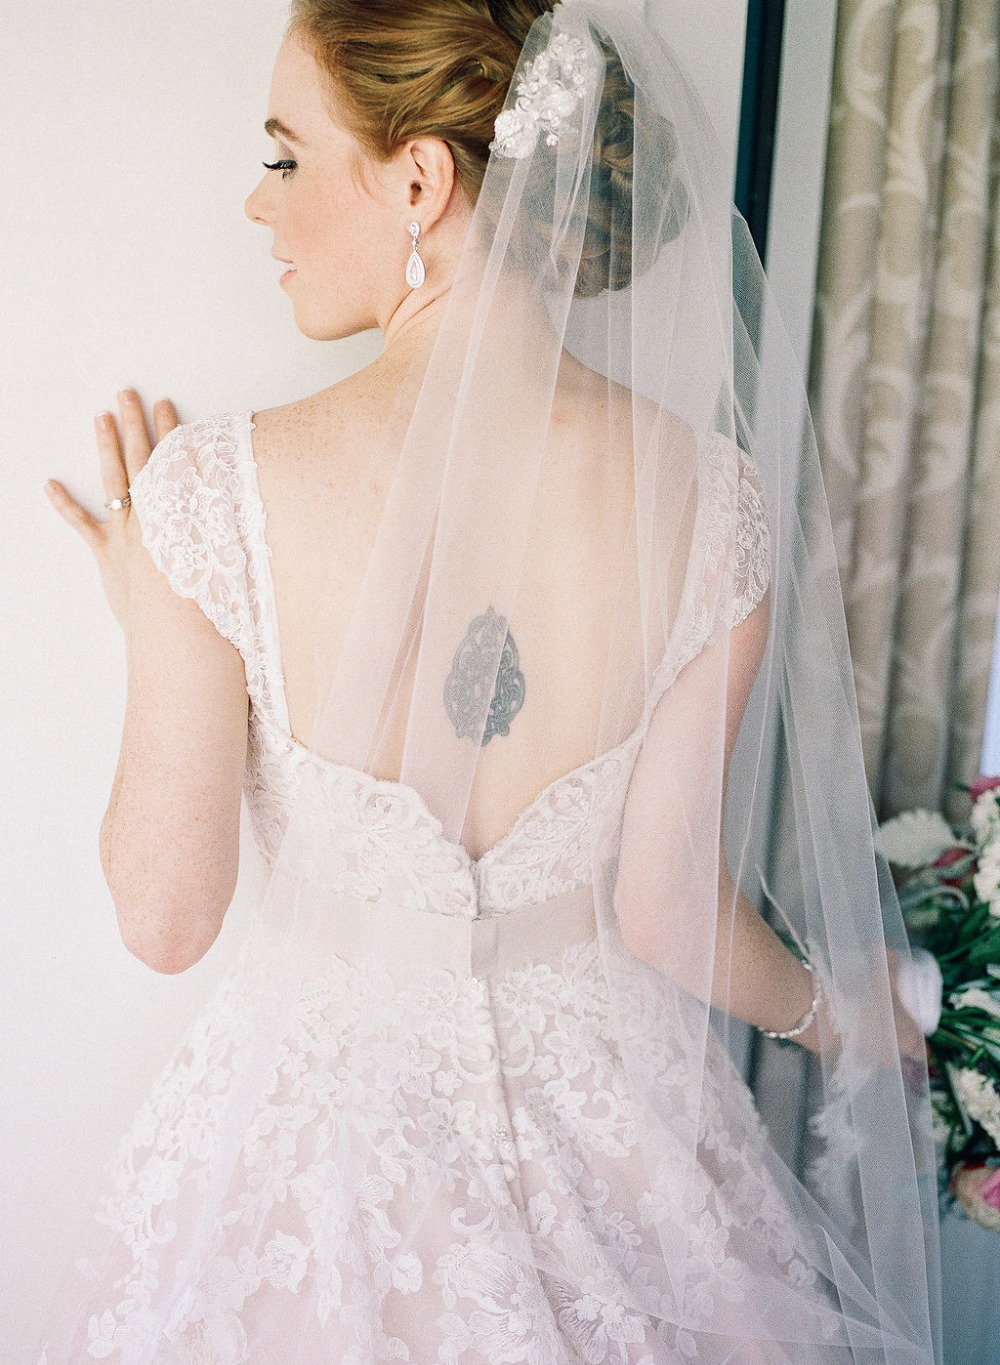 Elegant bridal portrait